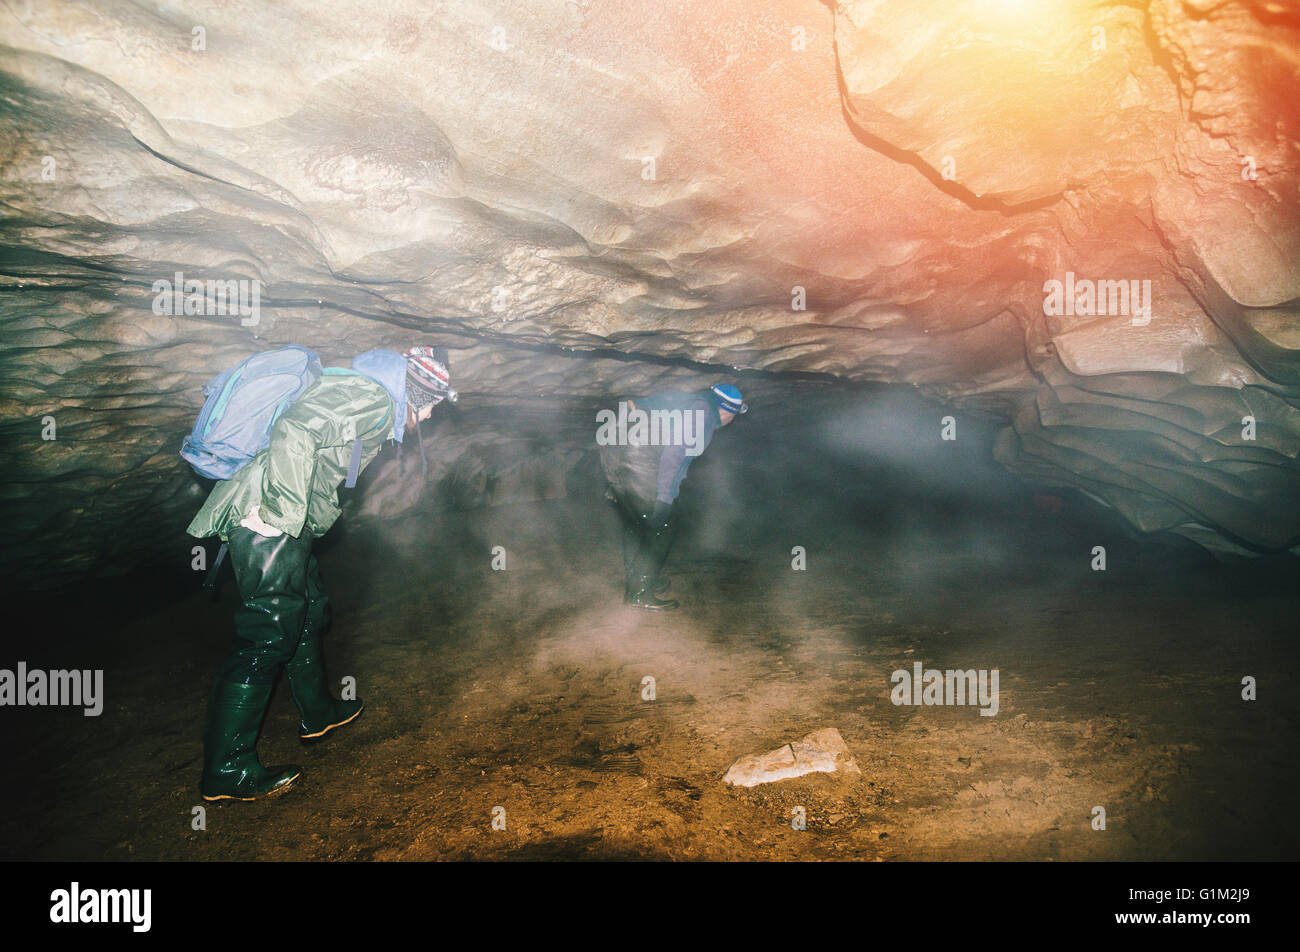 Caucasian hikers exploring cave Stock Photo